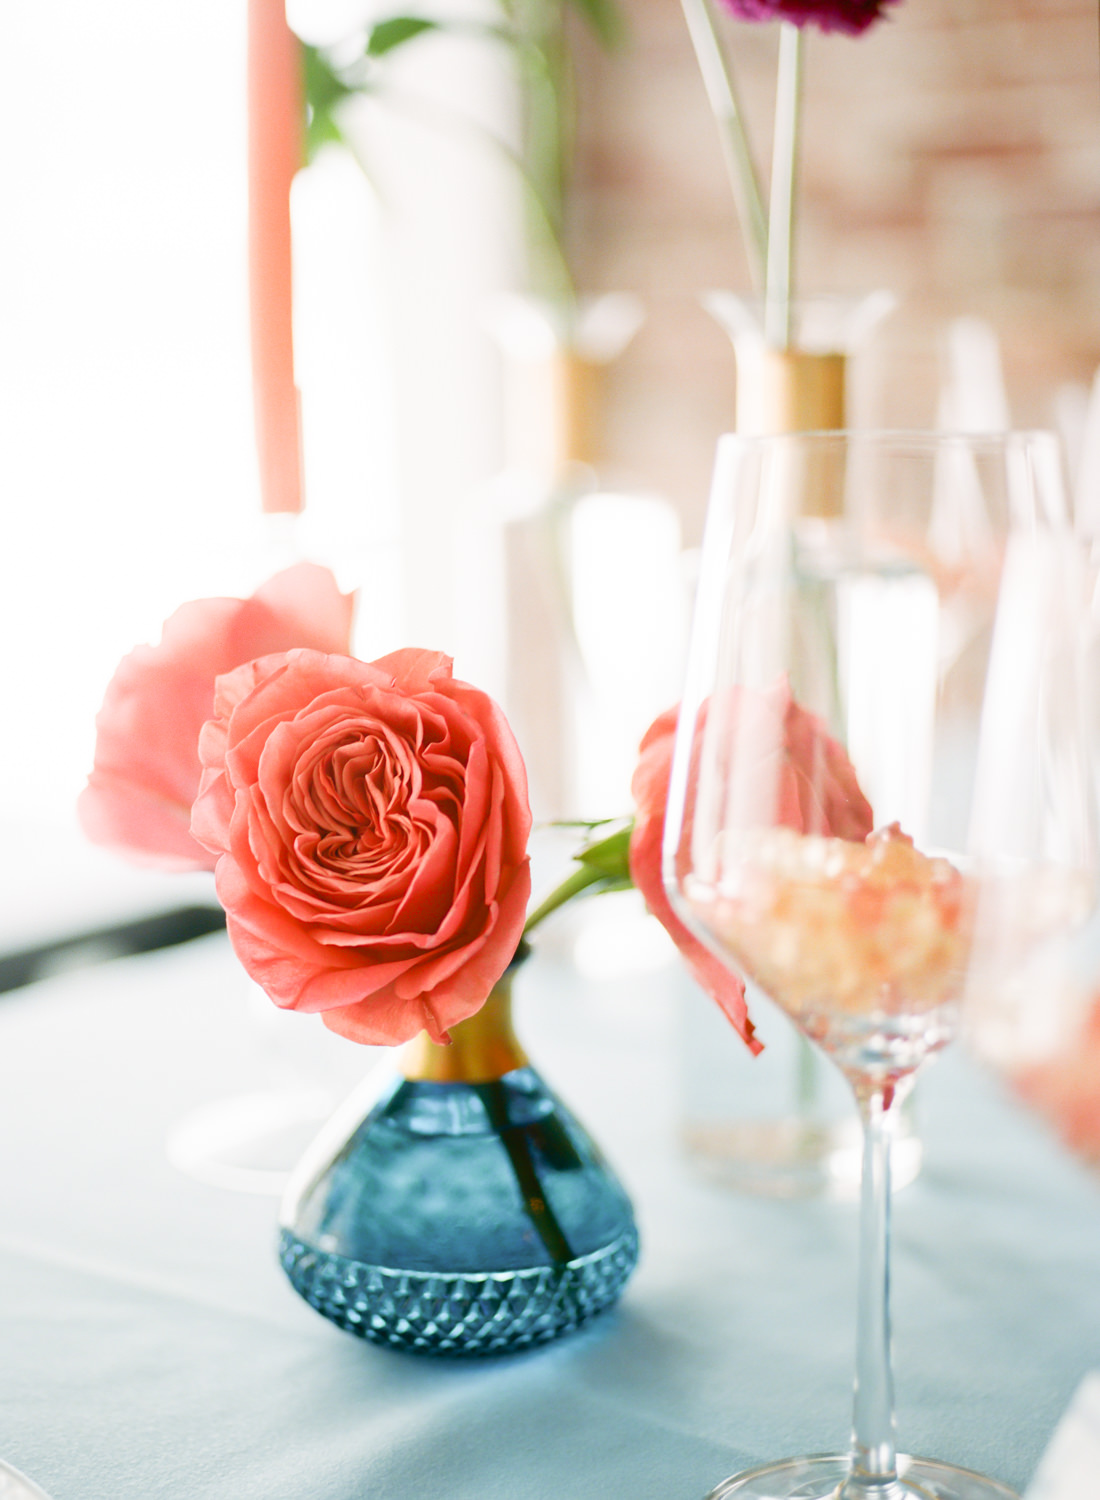 Schott Zwiesel wine glasses, Lo in London details, Coral wedding reception decor,St. Louis fine art film wedding photographer Erica Robnett Photography